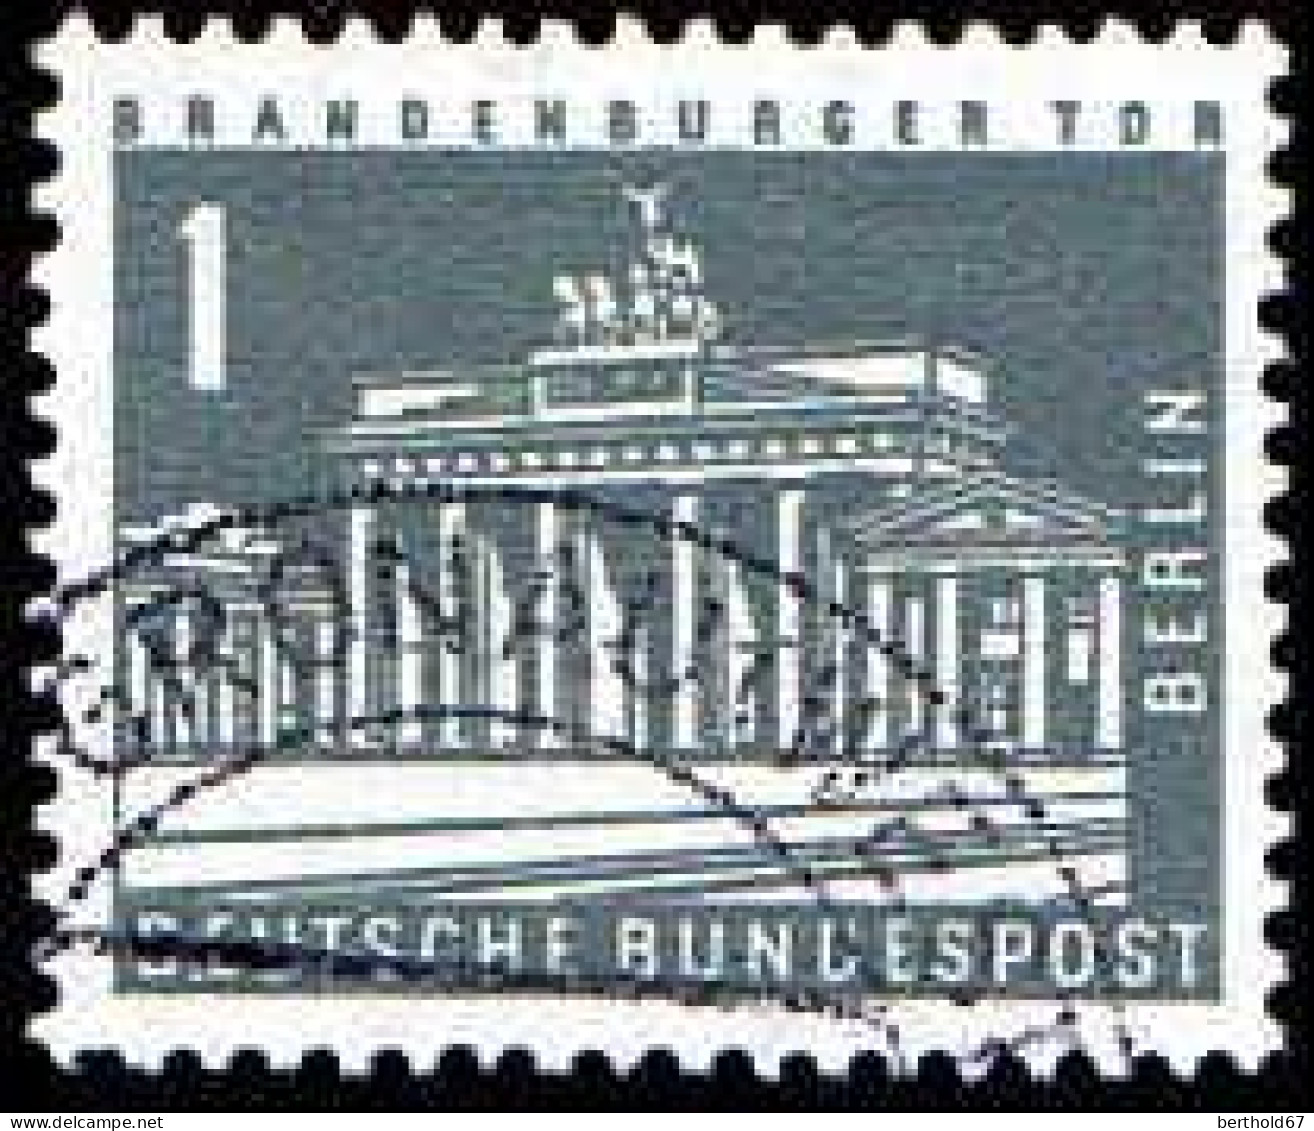 Berlin Poste Obl Yv:125 Mi:140w Brandenburger Tor (TB Cachet Rond) - Oblitérés